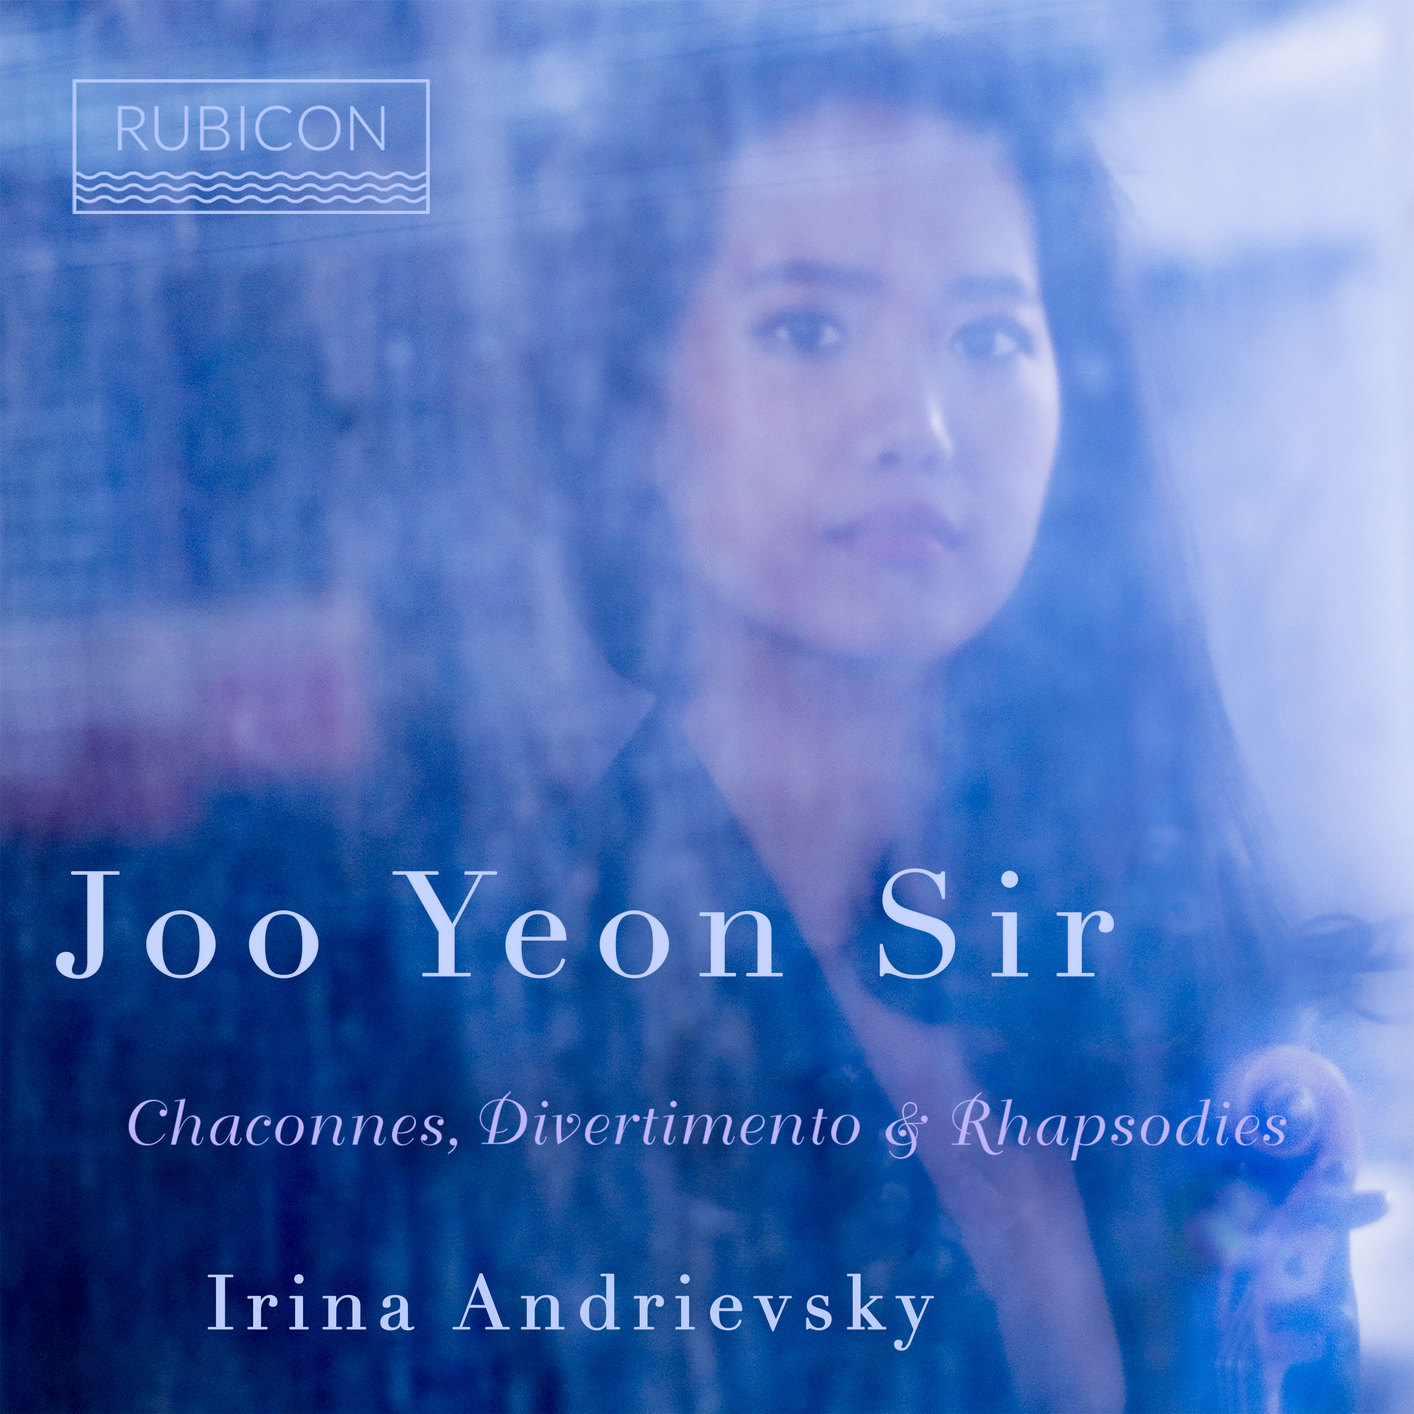 Joo Yeon Sir & Irina Andrievsky – Chaconnes, Divertimento & Rhapsodies (2019) [FLAC 24bit/96kHz]